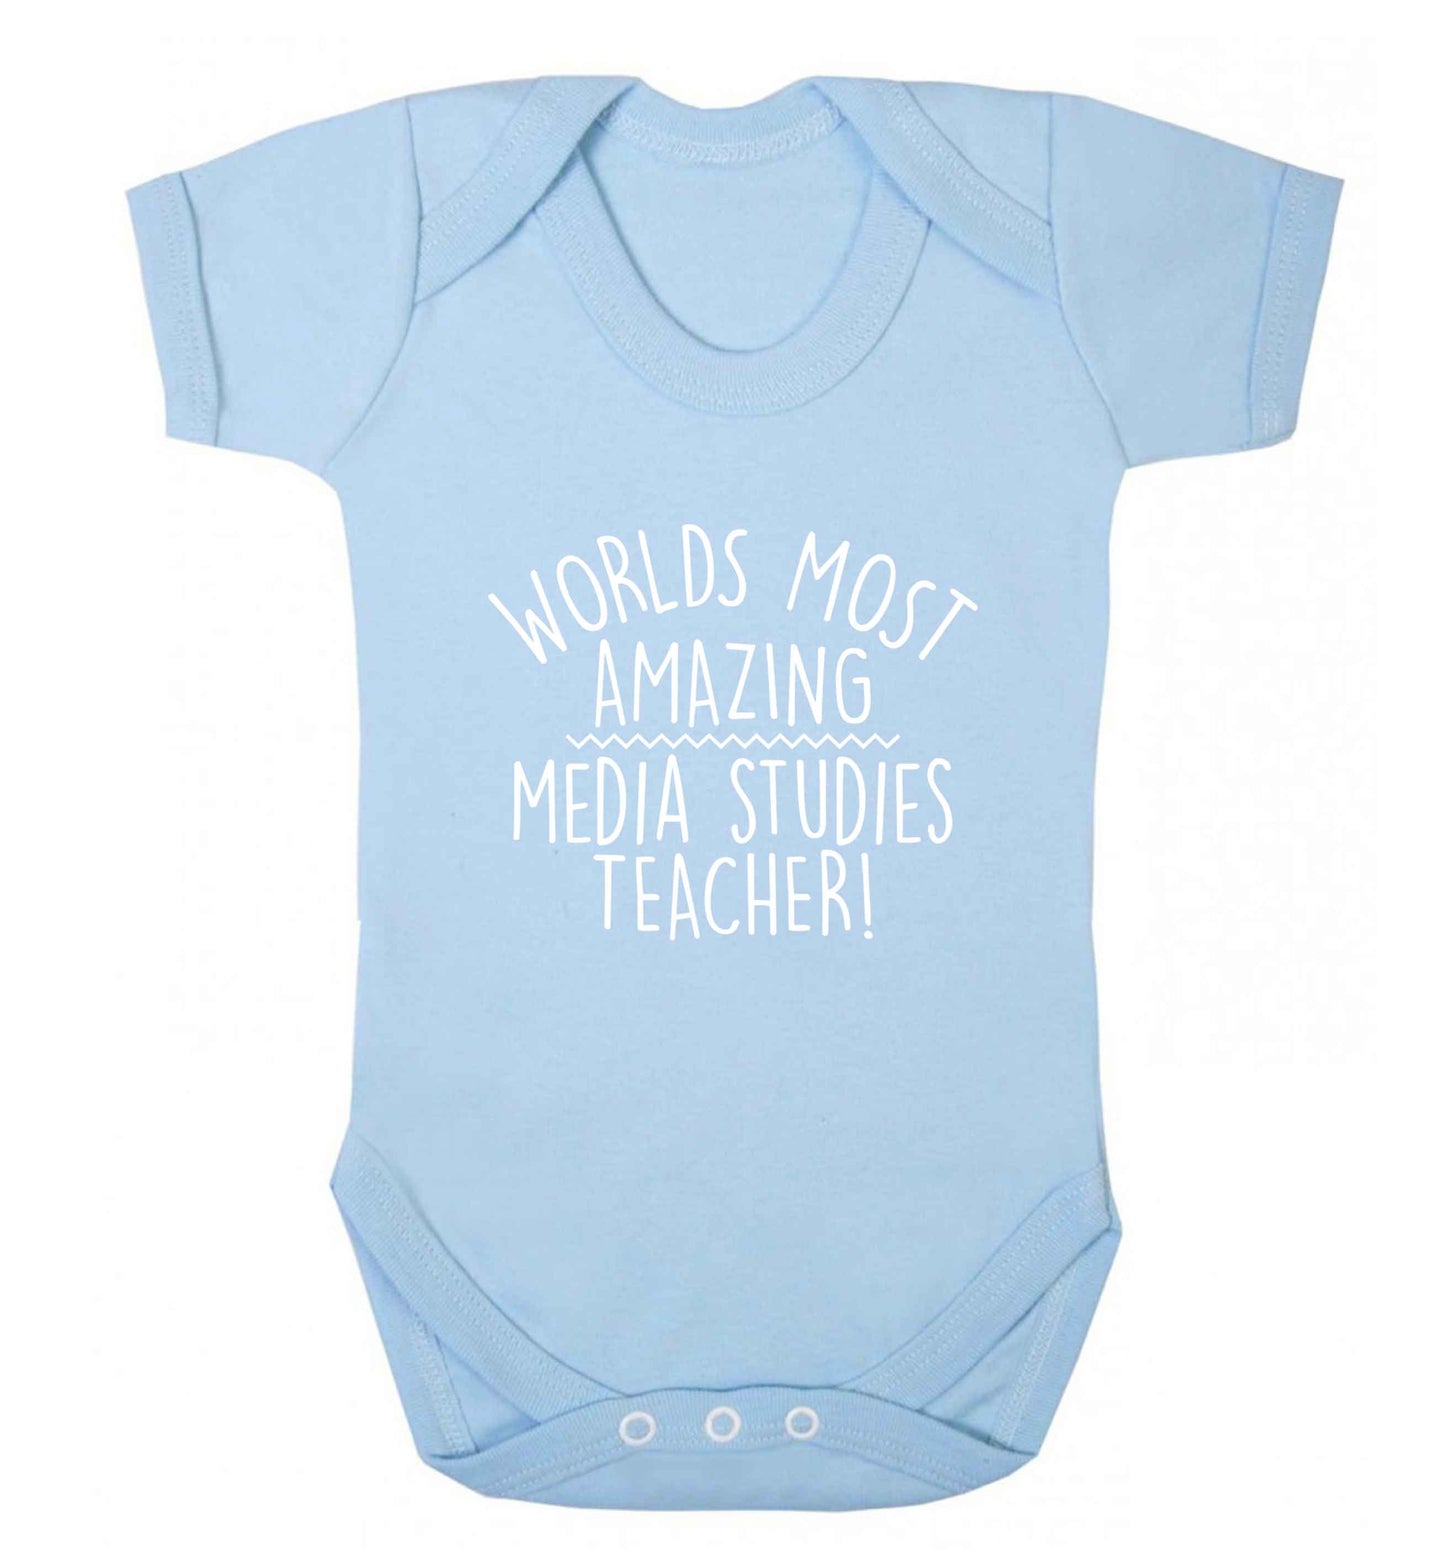 Worlds most amazing media studies teacher baby vest pale blue 18-24 months